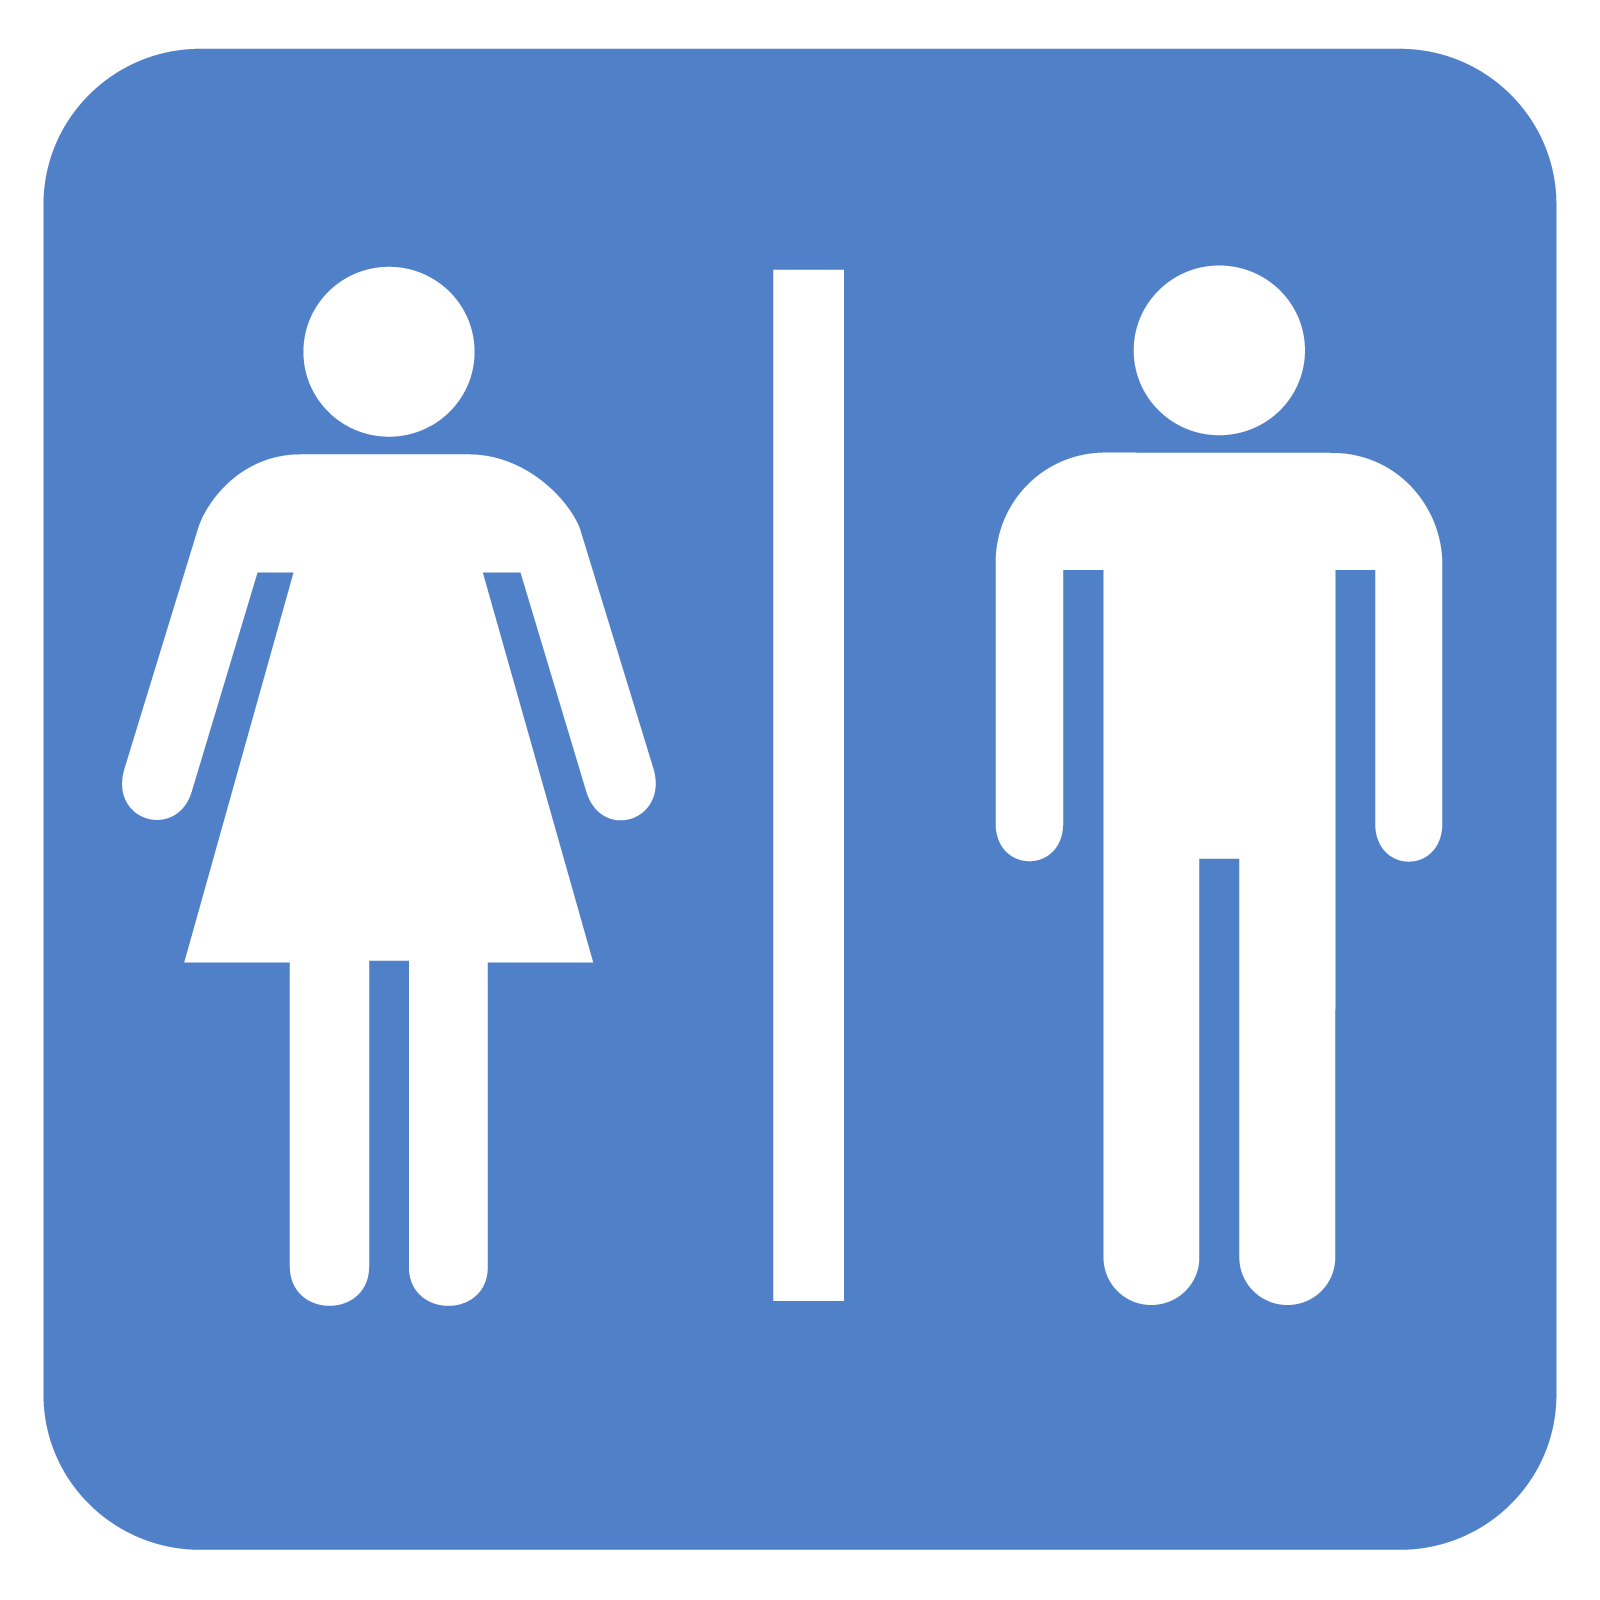 Free Printable Restroom Signs, Download Free Printable Restroom Signs